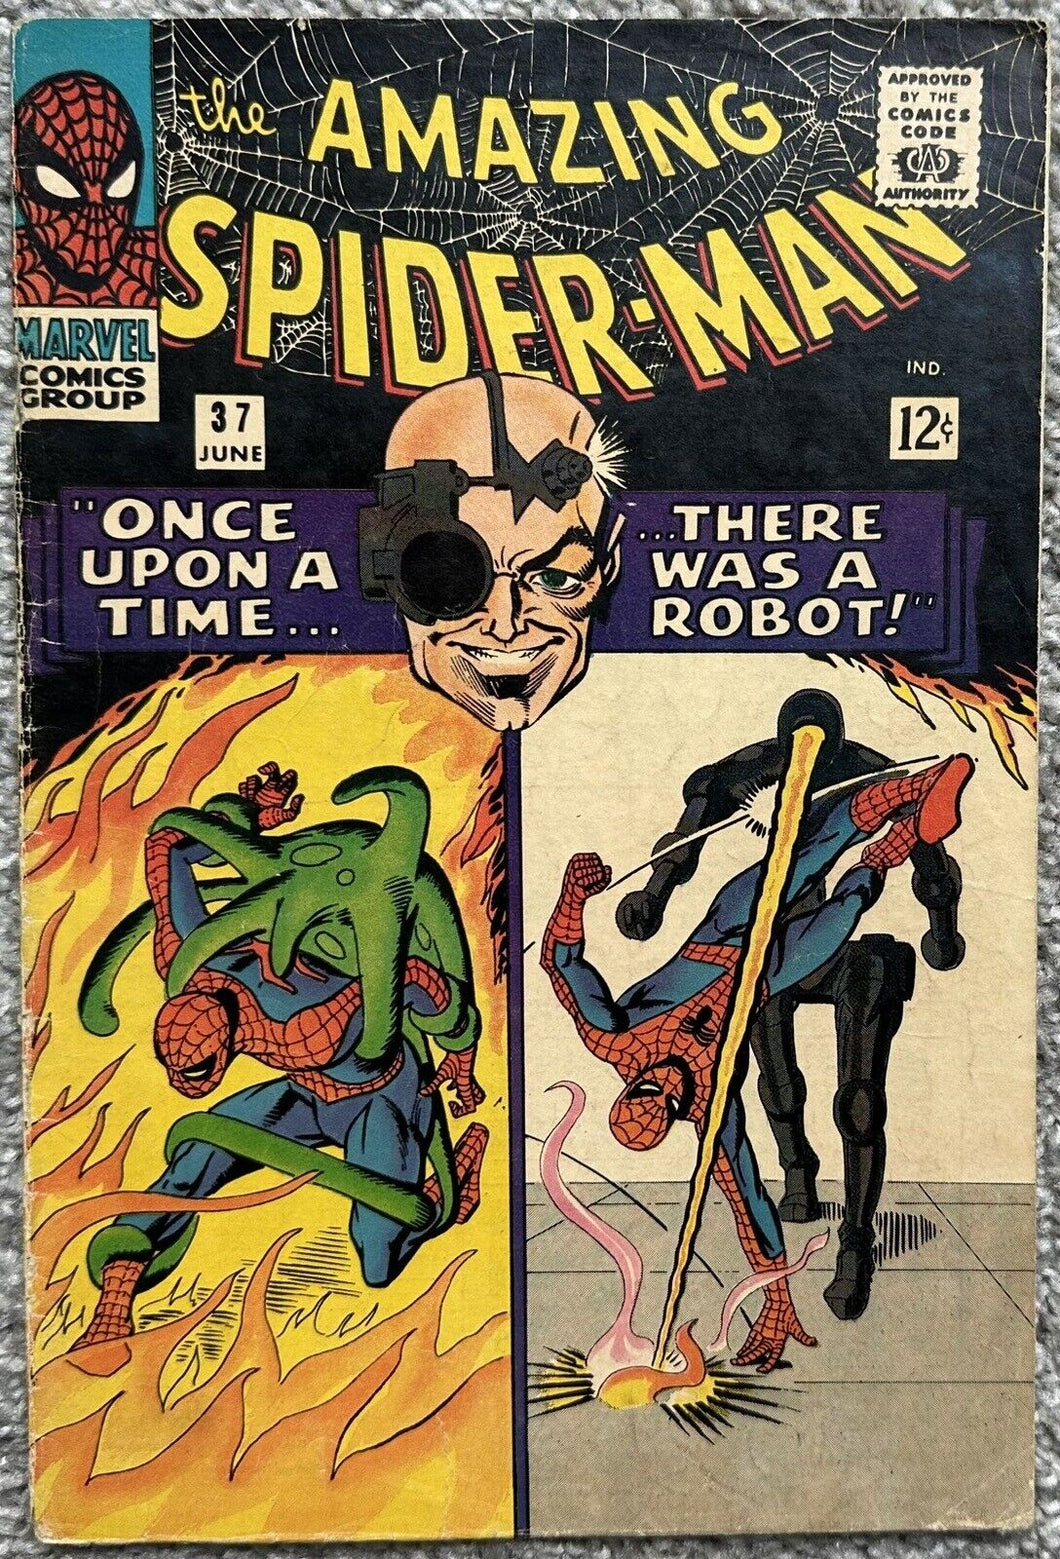 THE AMAZING SPIDER-MAN #37 (MARVEL,1966) 1st Norman Osborn